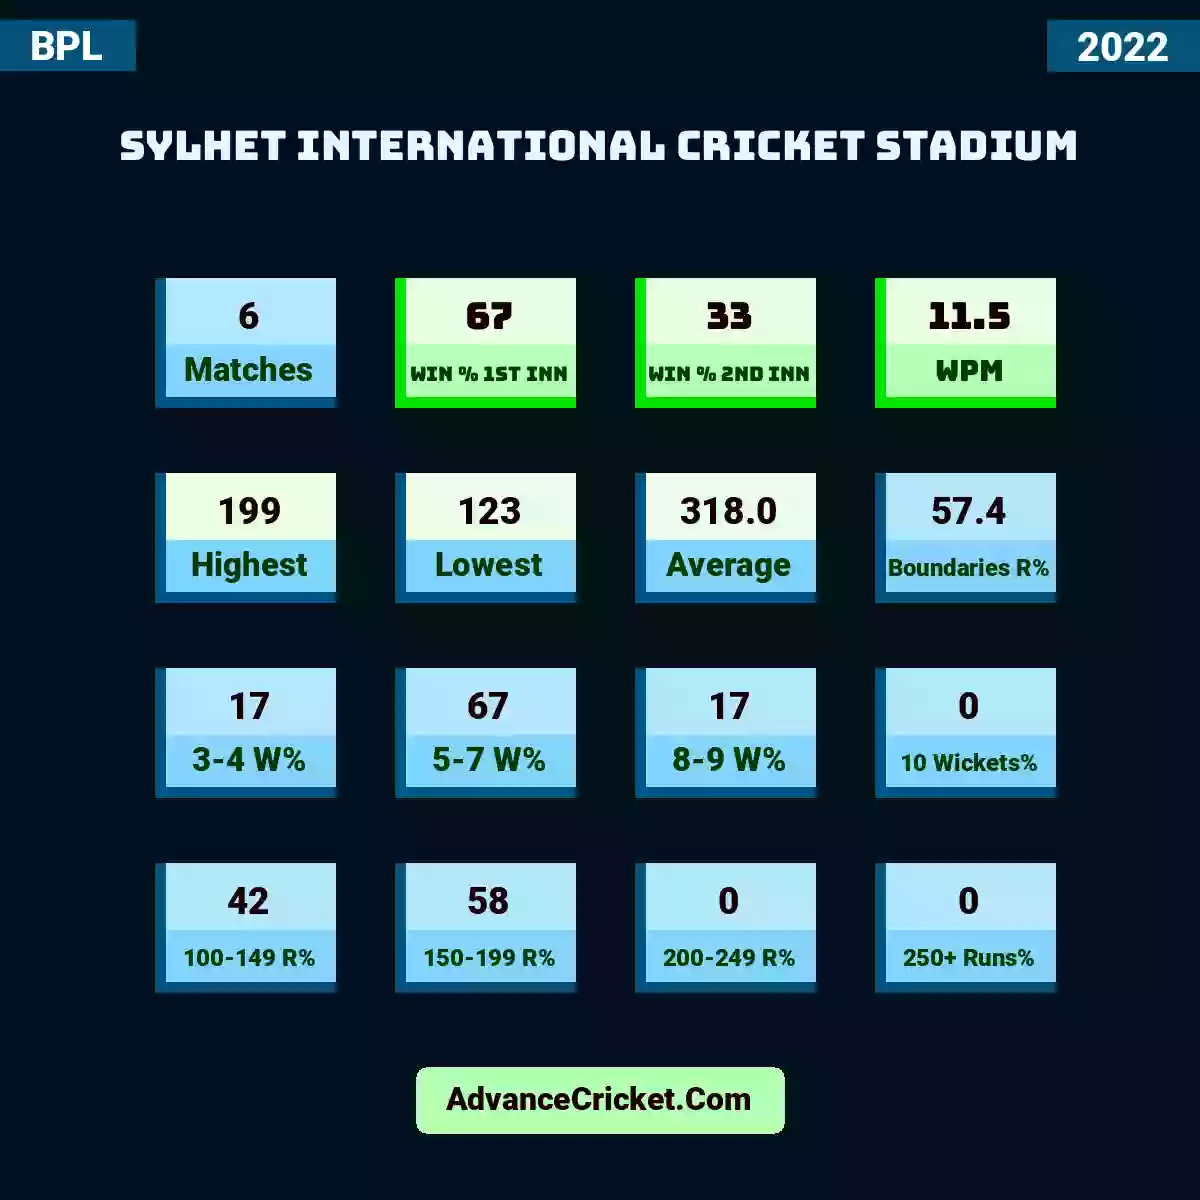 Image showing Sylhet International Cricket Stadium with Matches: 6, Win % 1st Inn: 67, Win % 2nd Inn: 33, WPM: 11.5, Highest: 199, Lowest: 123, Average: 318.0, Boundaries R%: 57.4, 3-4 W%: 17, 5-7 W%: 67, 8-9 W%: 17, 10 Wickets%: 0, 100-149 R%: 42, 150-199 R%: 58, 200-249 R%: 0, 250+ Runs%: 0.